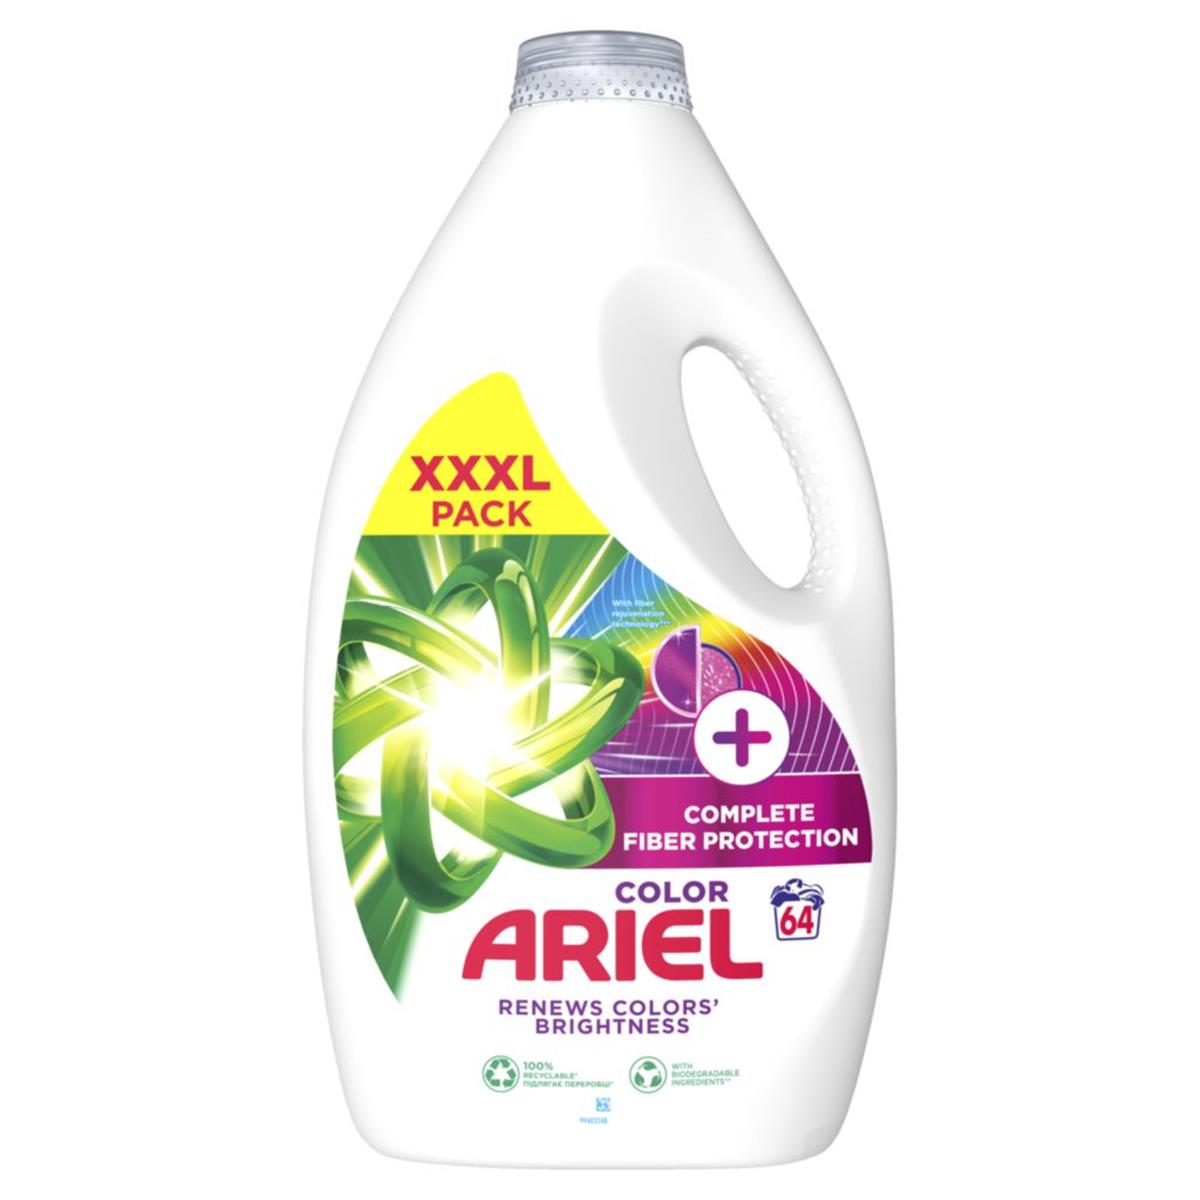 Ariel gel 3.2l 64PD Complete fiber protection